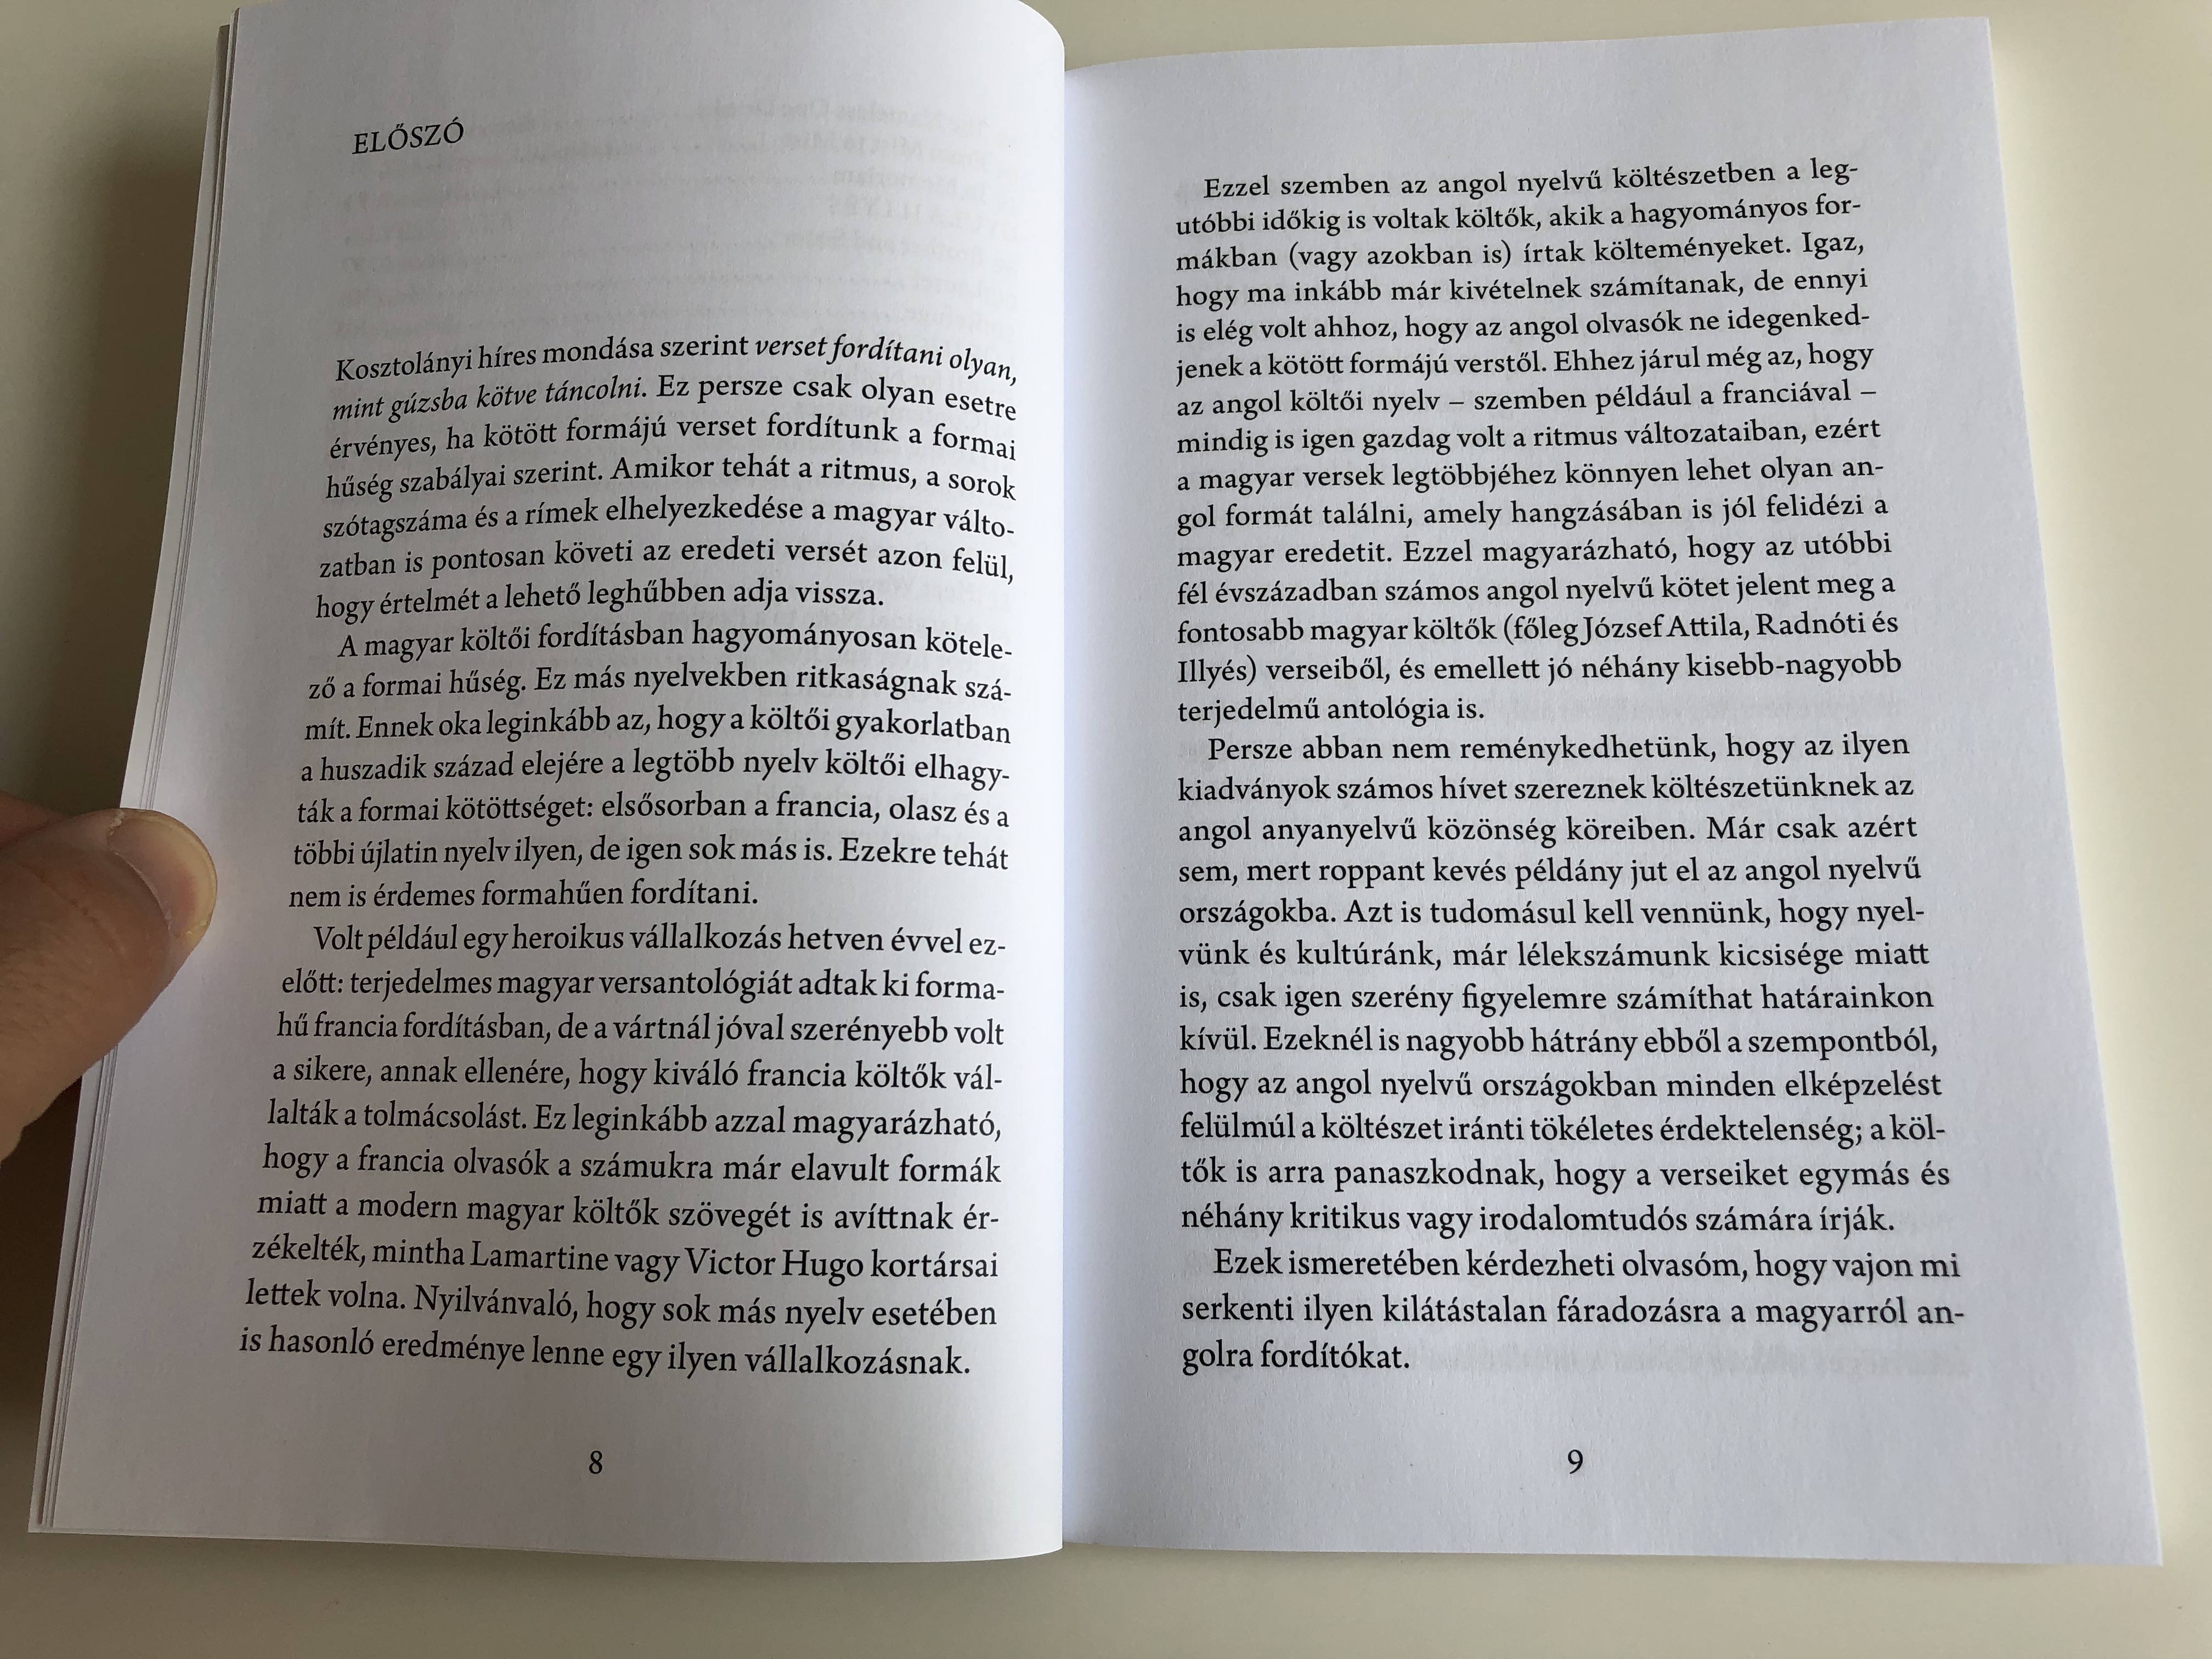 36-klasszikus-magyar-vers-magyarul-s-angolul-36-classic-hungarian-poems-in-english-and-hungarian-translation-t-tfalusi-istv-n-tinta-k-nyvkiad-2019-5-.jpg